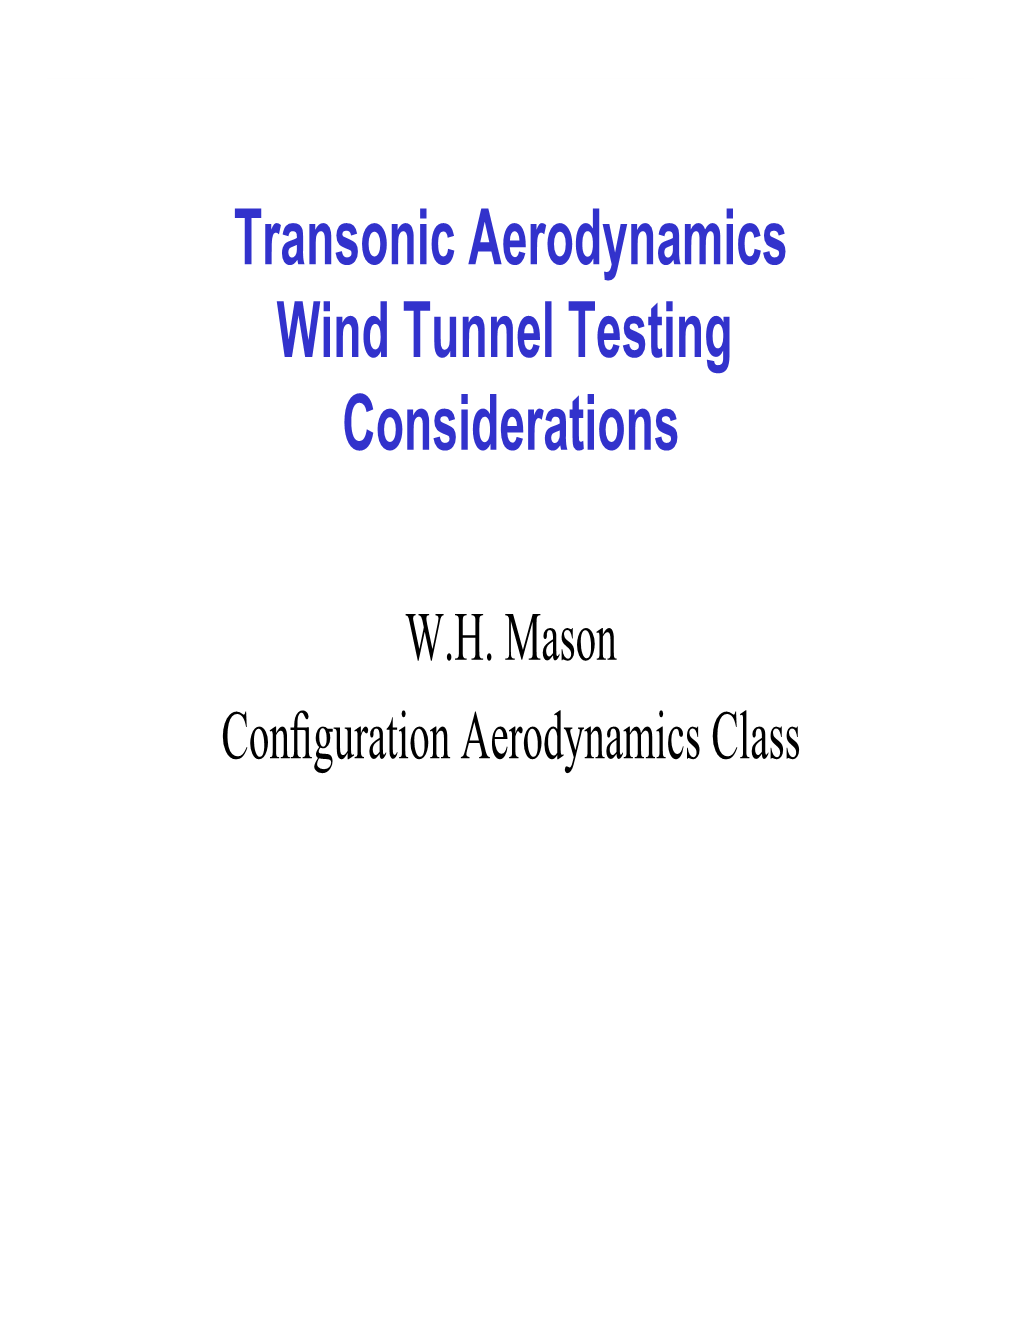 Transonic Aerodynamics Wind Tunnel Testing Considerations